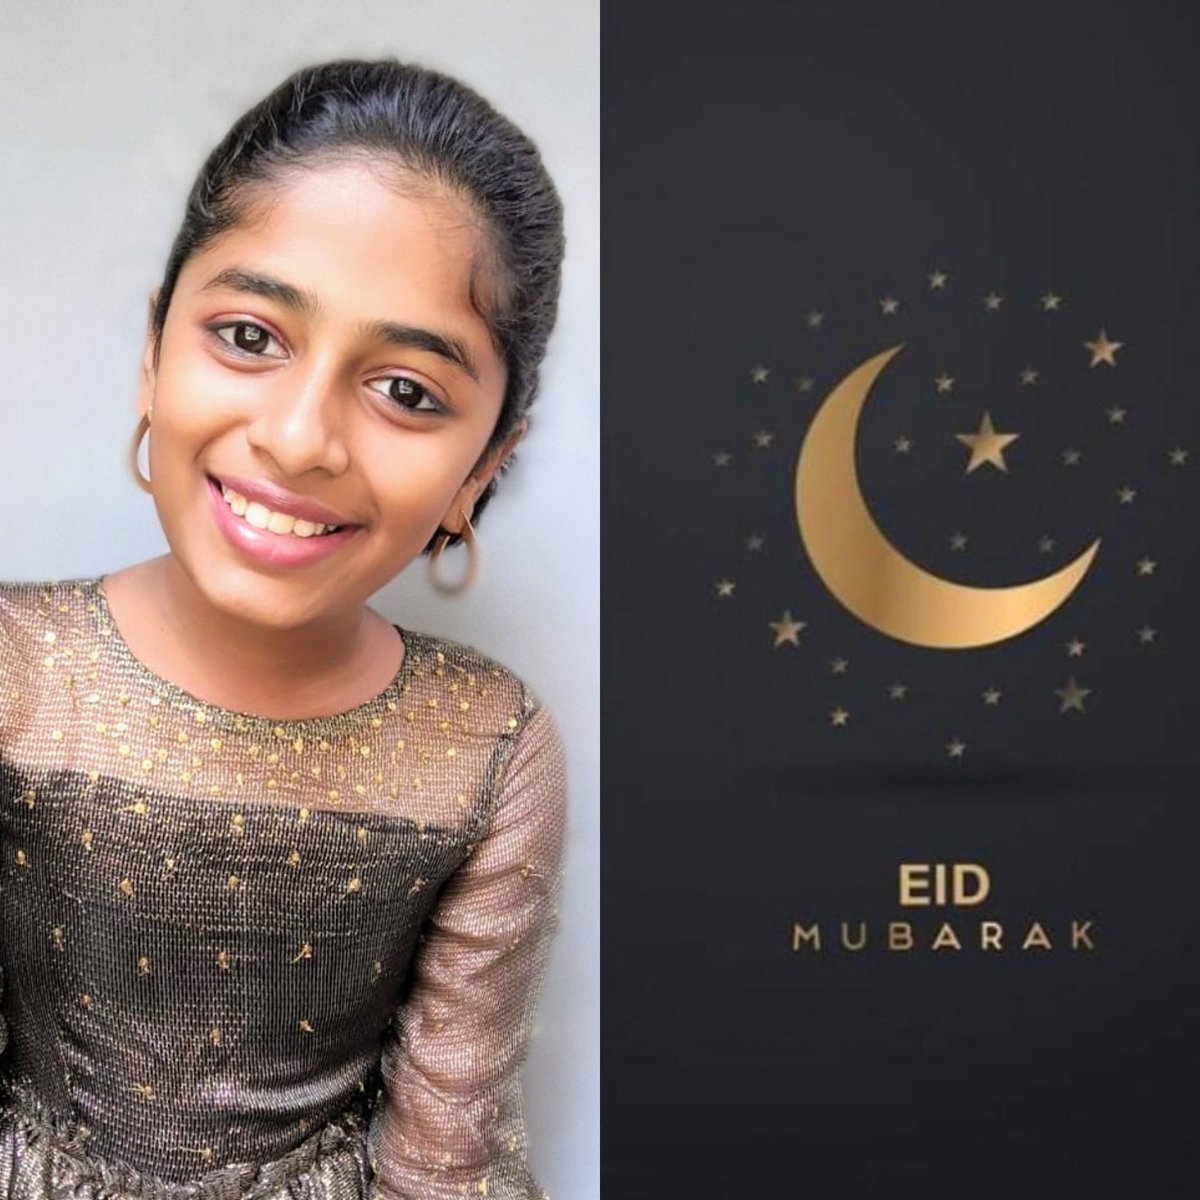 Happy Eid | Spread LOVE and PEACE with prayers😍
#HappyEid #HappyEid2020 #eidmubarak2020 #Praniti #PranitiMusical #PranitiOfficial